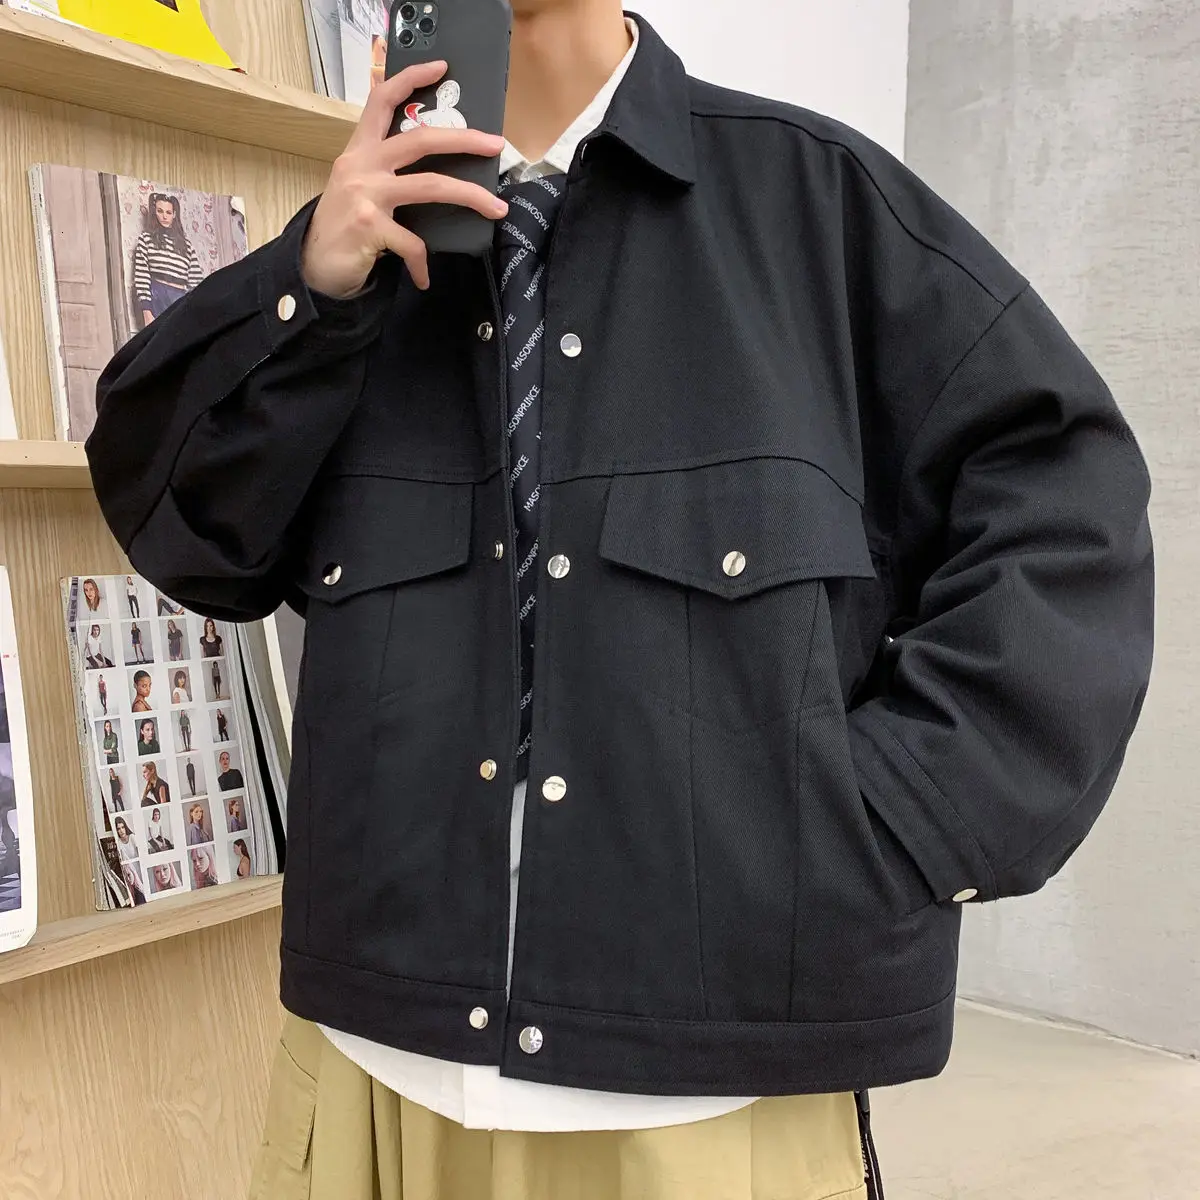 

Men's Coat Large Pocket Spring Summer Autumn Fashion Korean Tooling Jacket Loose Movement College New 2021 Black Blue